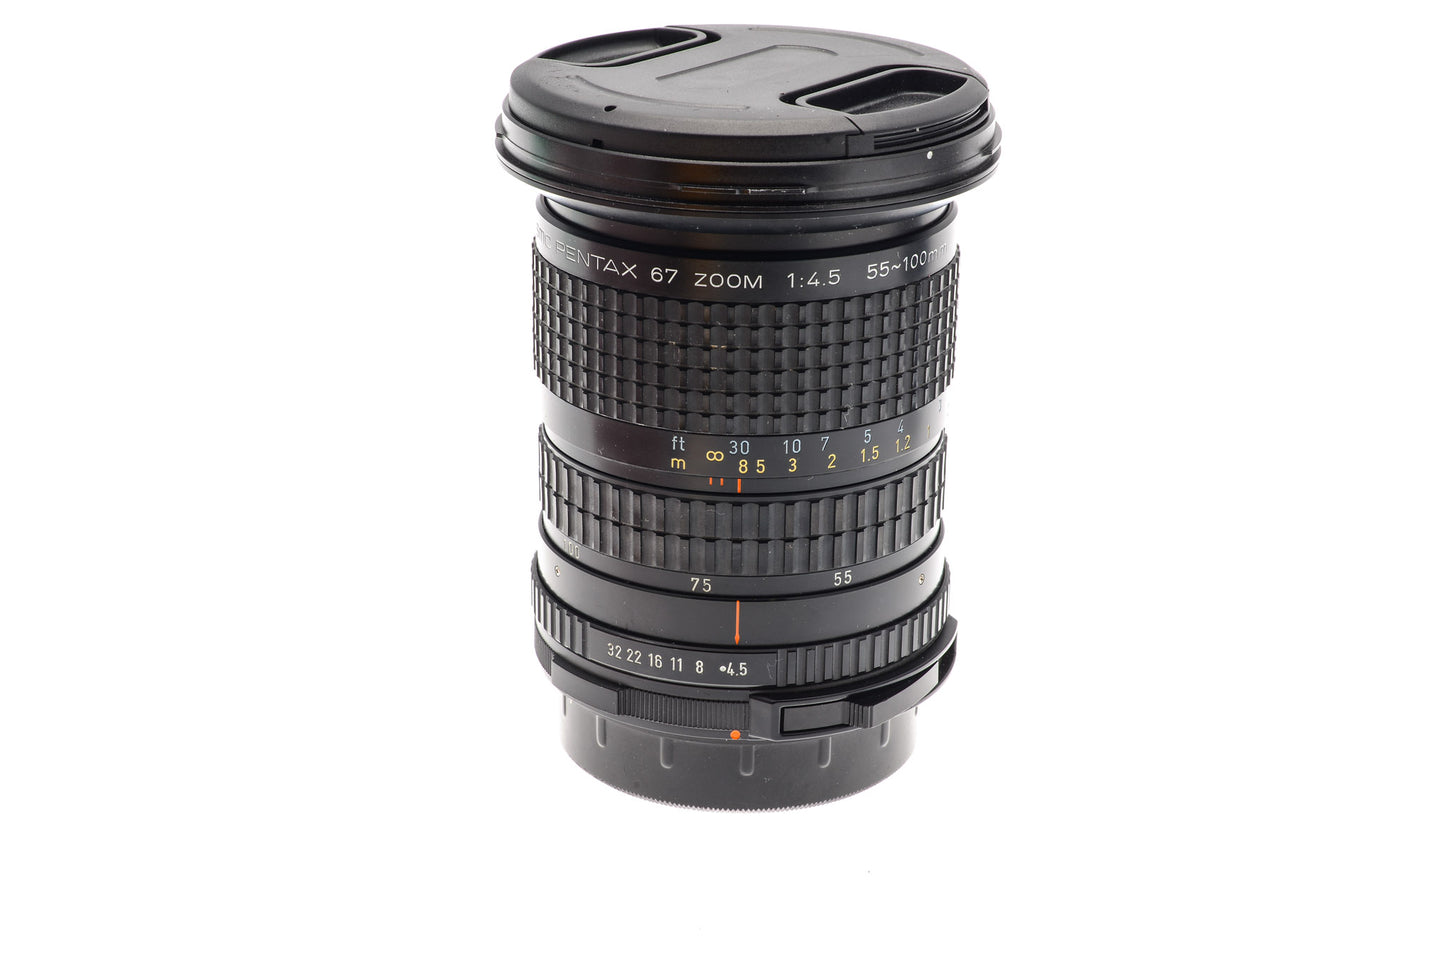 Pentax 55-100mm f4.5 SMC 67 Zoom - Lens